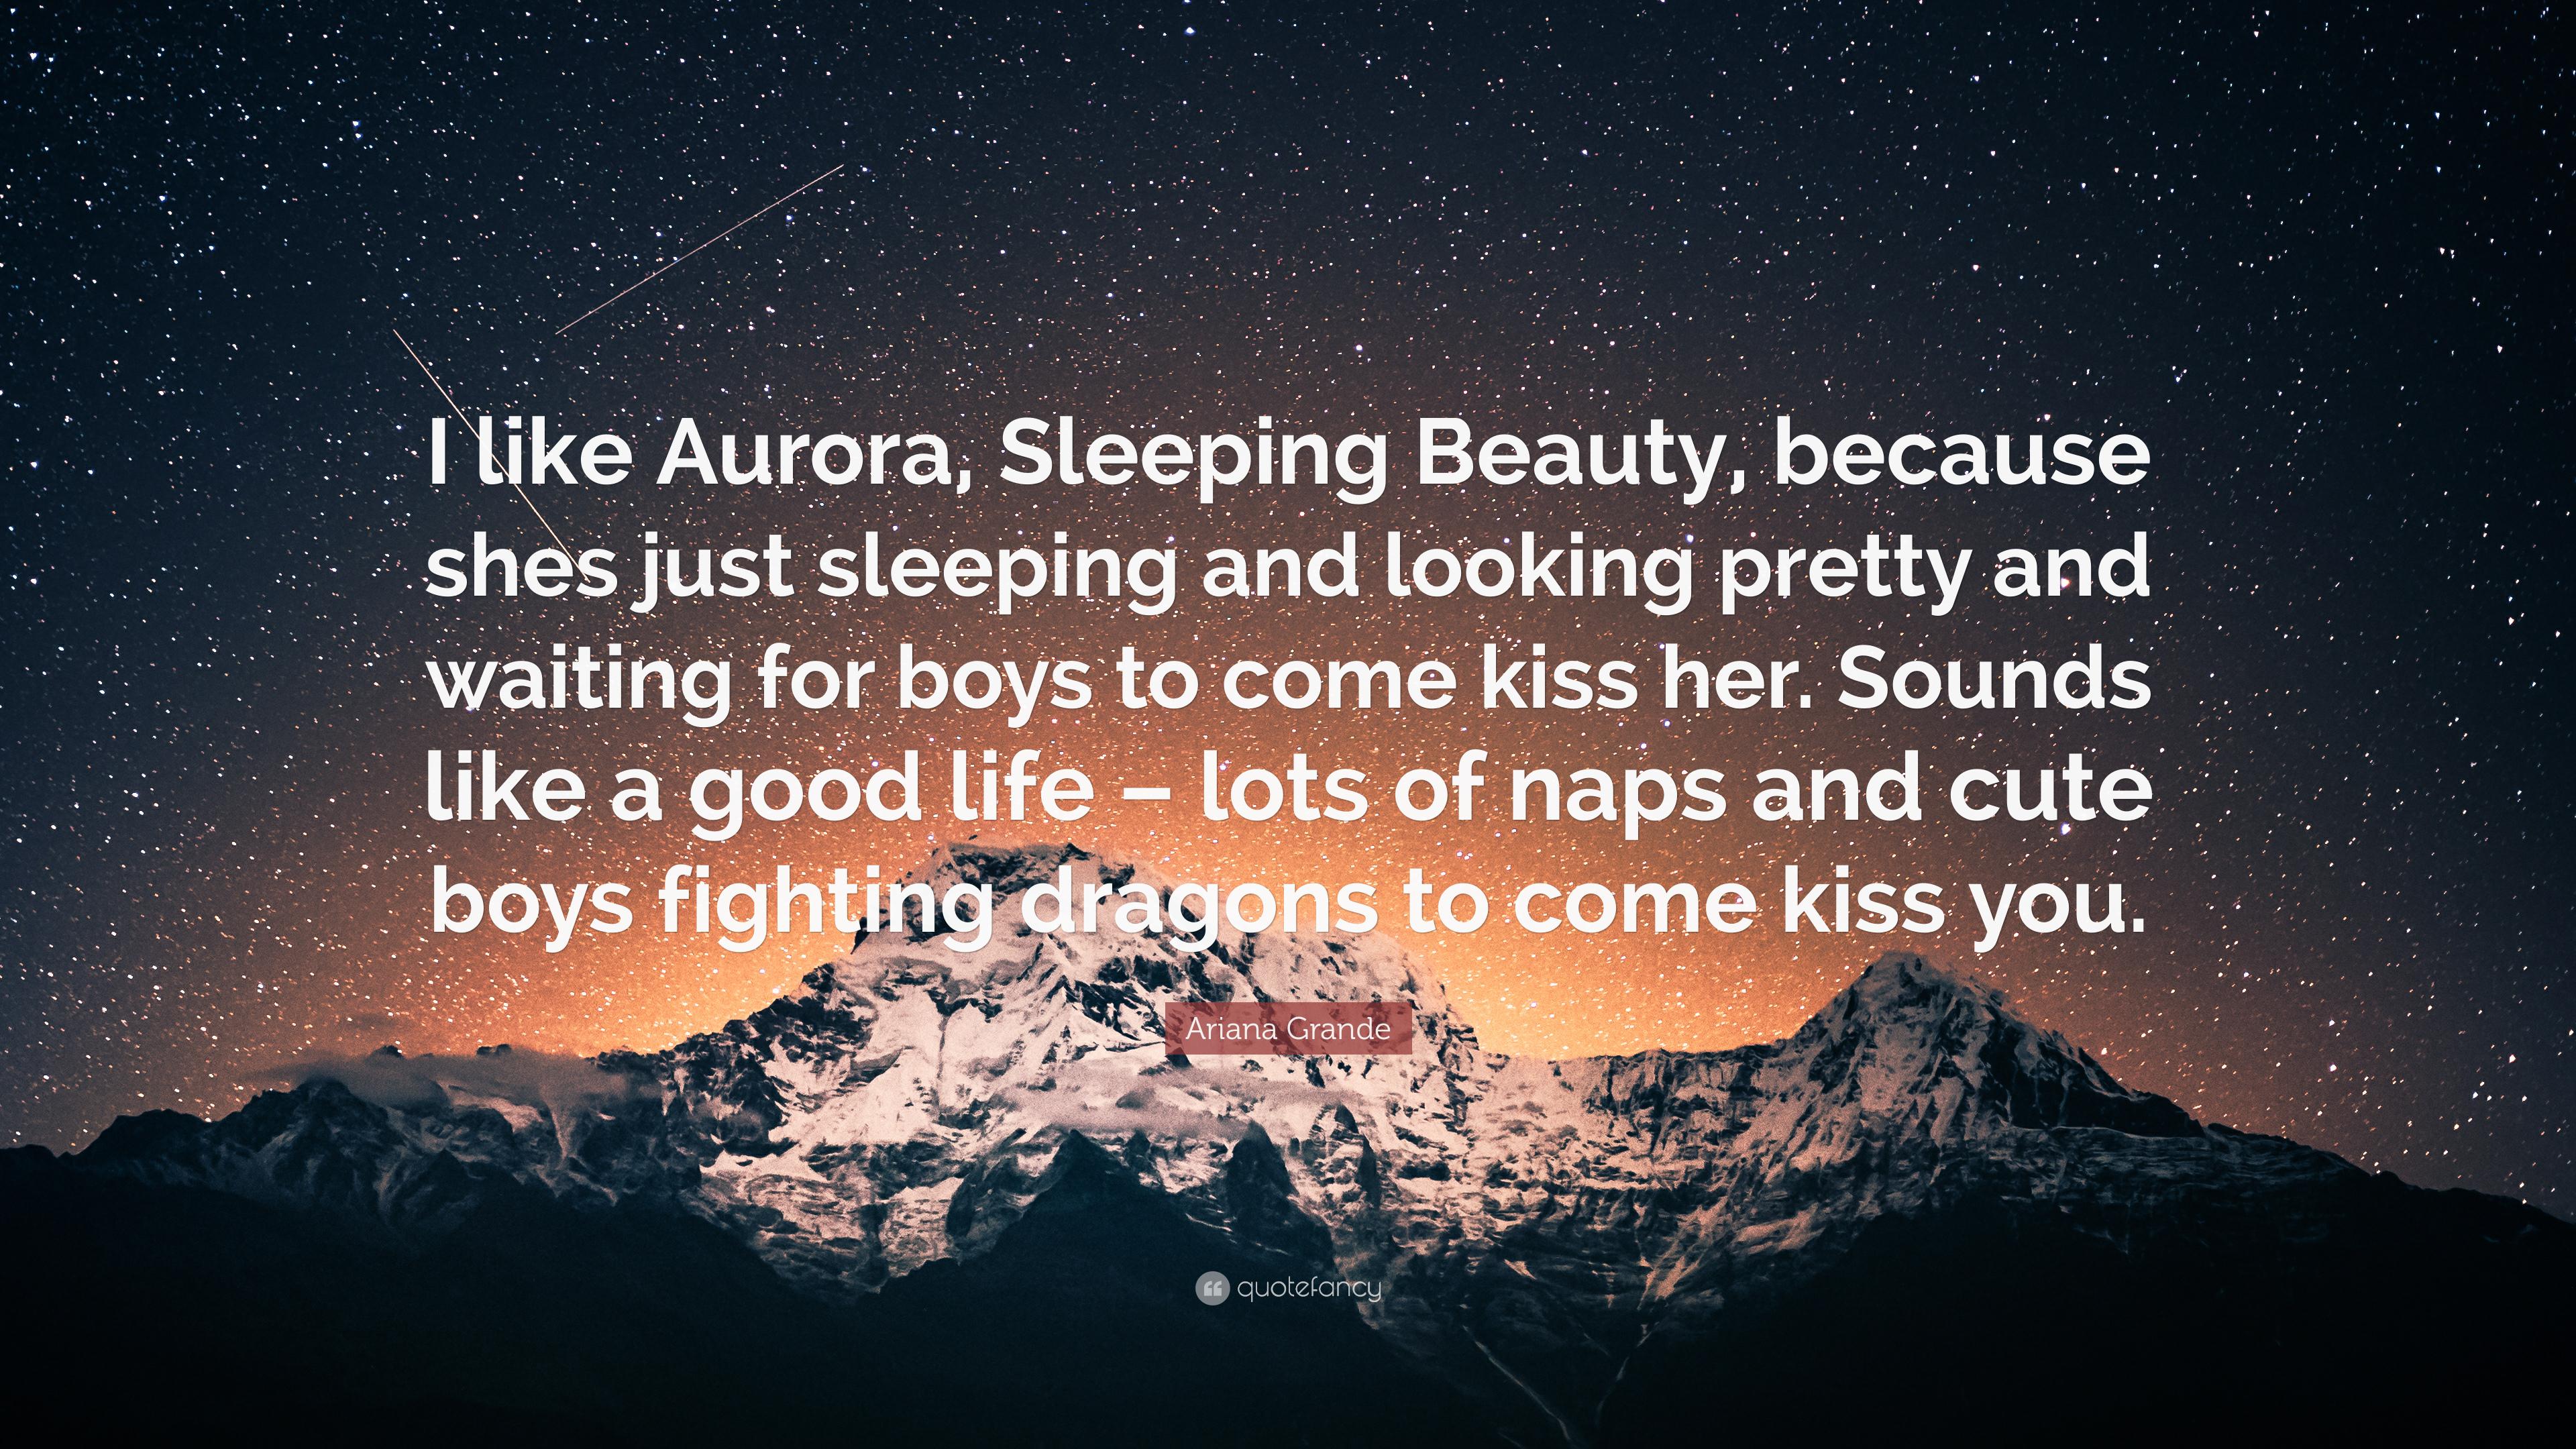 Ariana Grande Quote: “I like Aurora, Sleeping Beauty